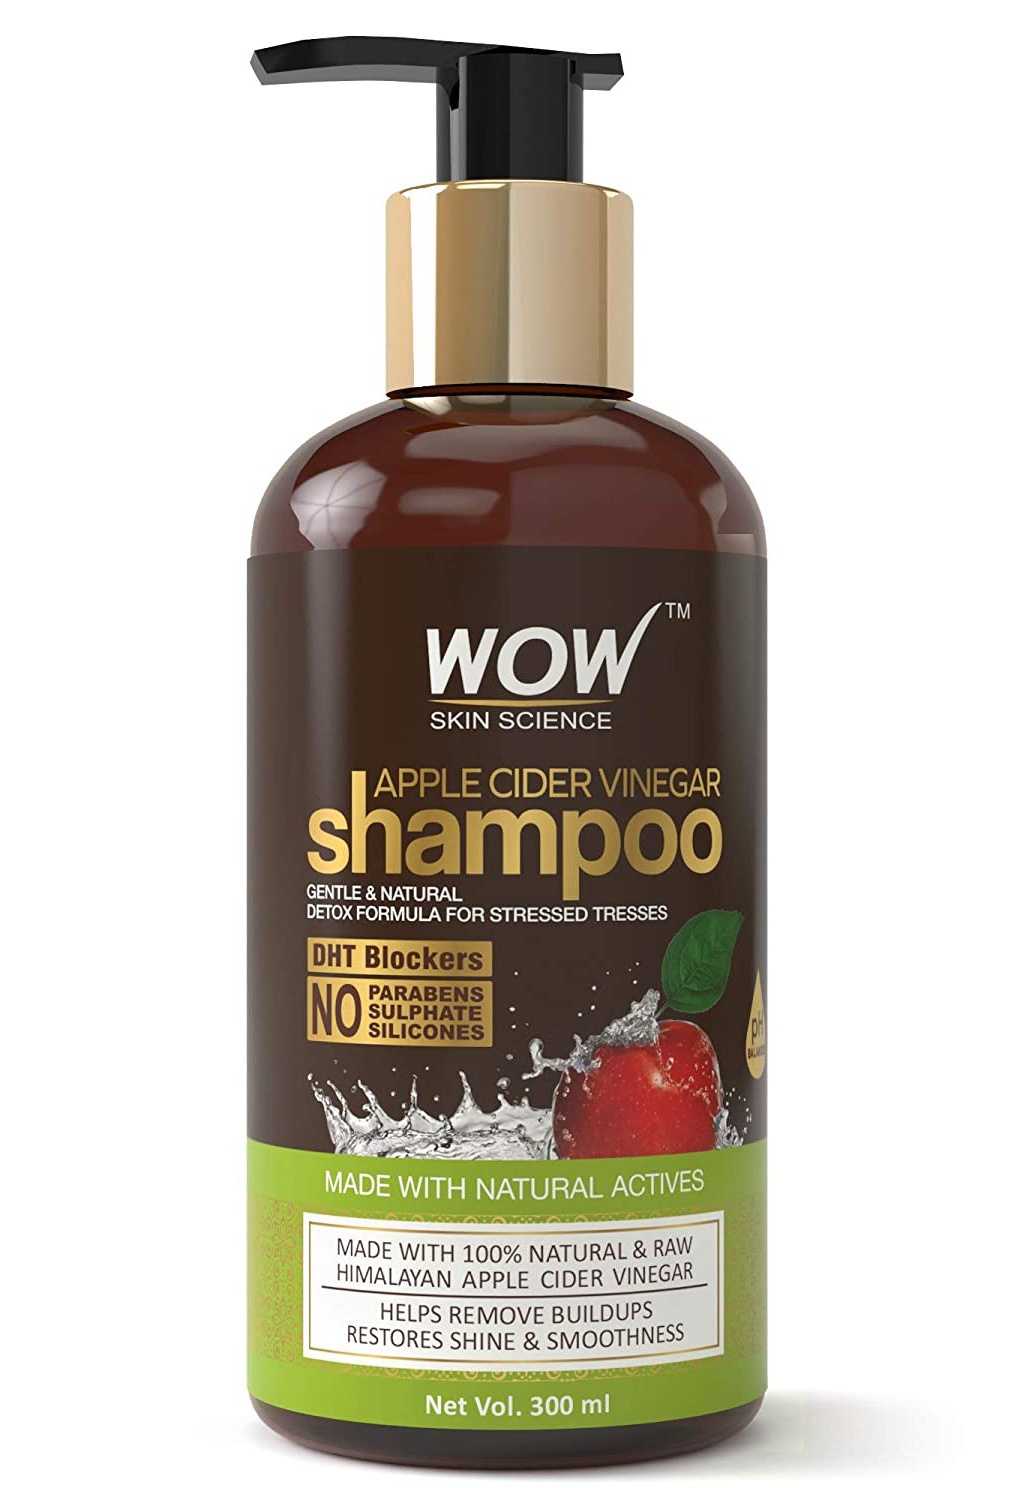 WOW skin science Apple Cider Vinegar Shampoo